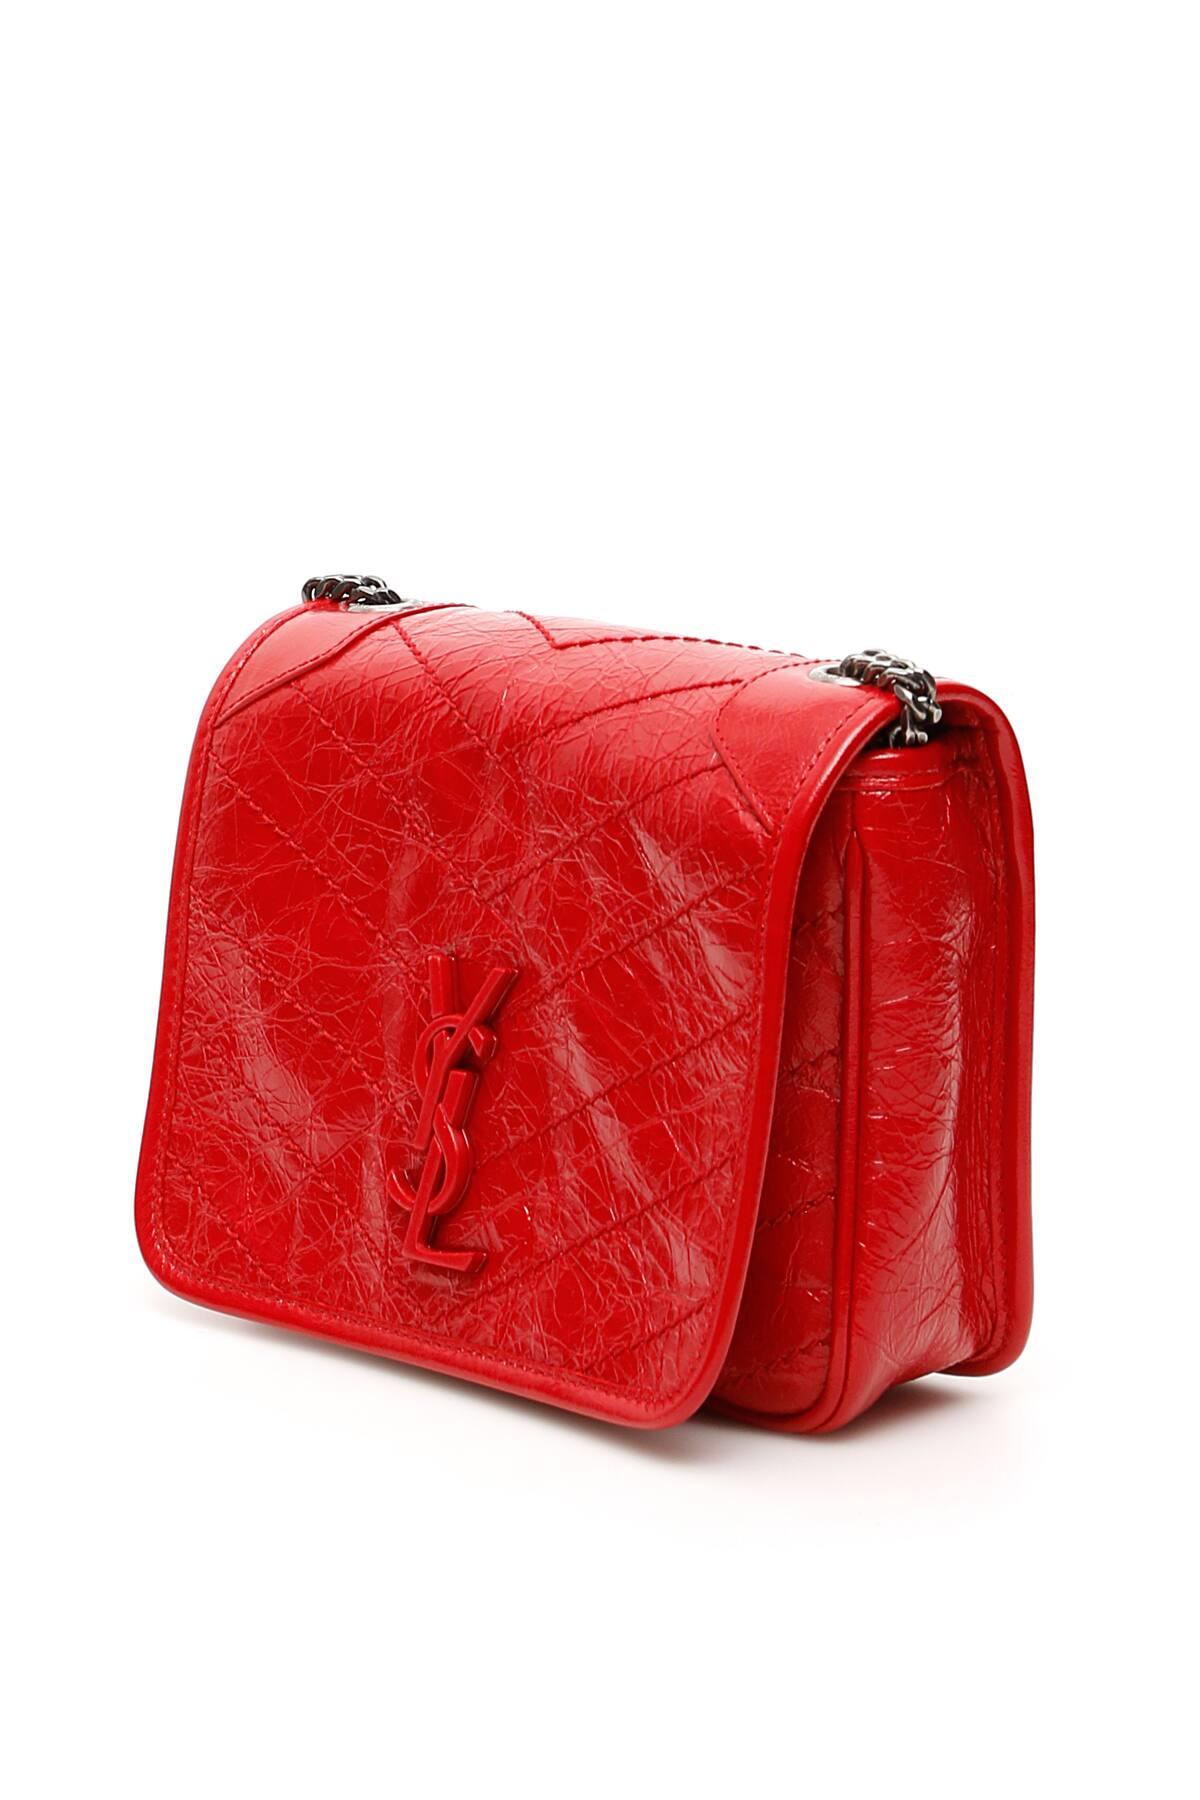 Saint Laurent Niki Mini Bag in Red